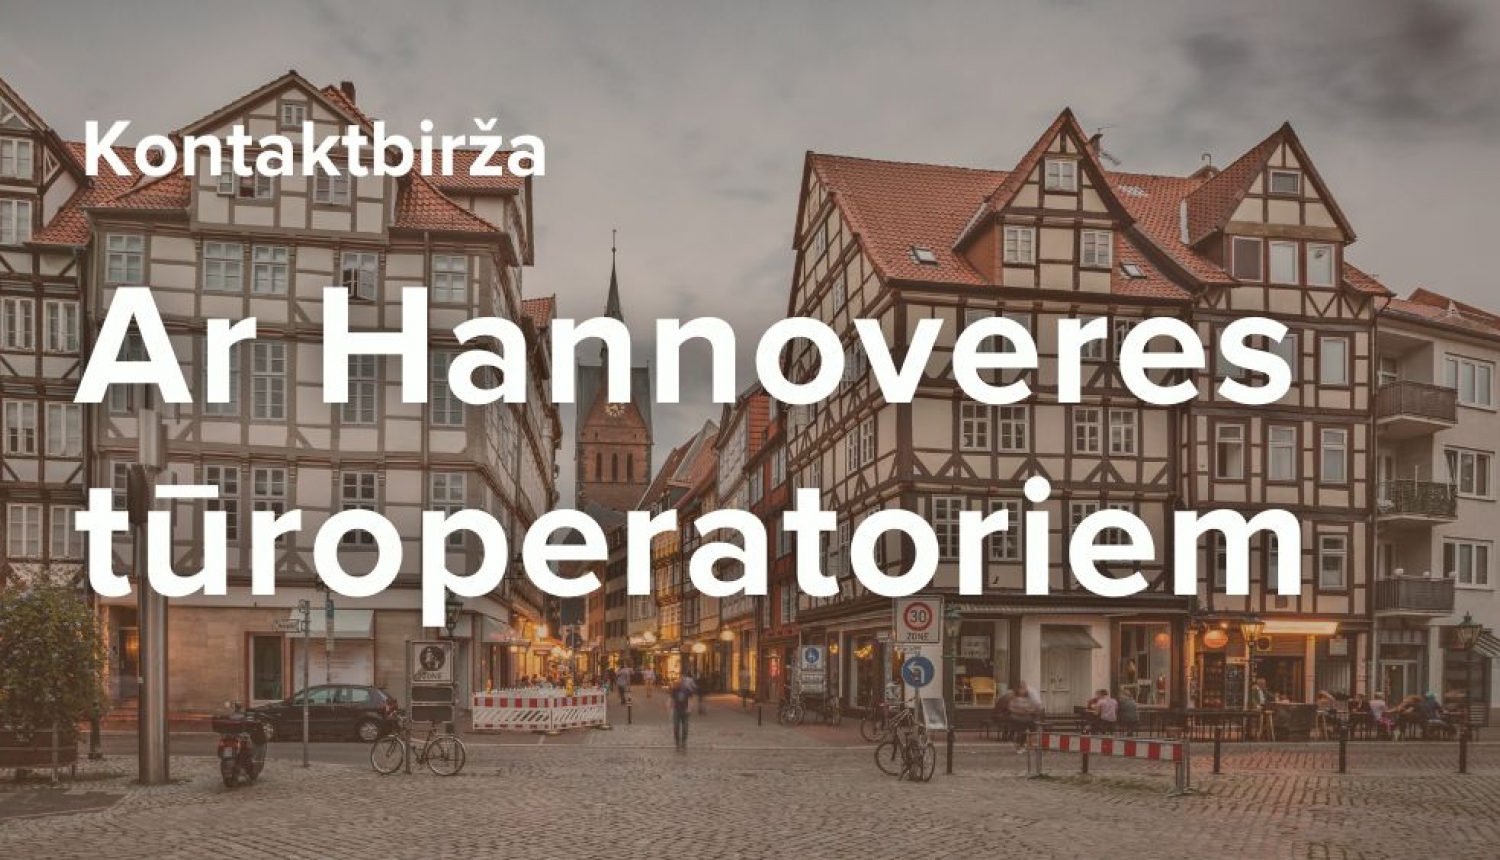 Tūrisma kontaktbirža ar Hannoveres tūroperatoriem